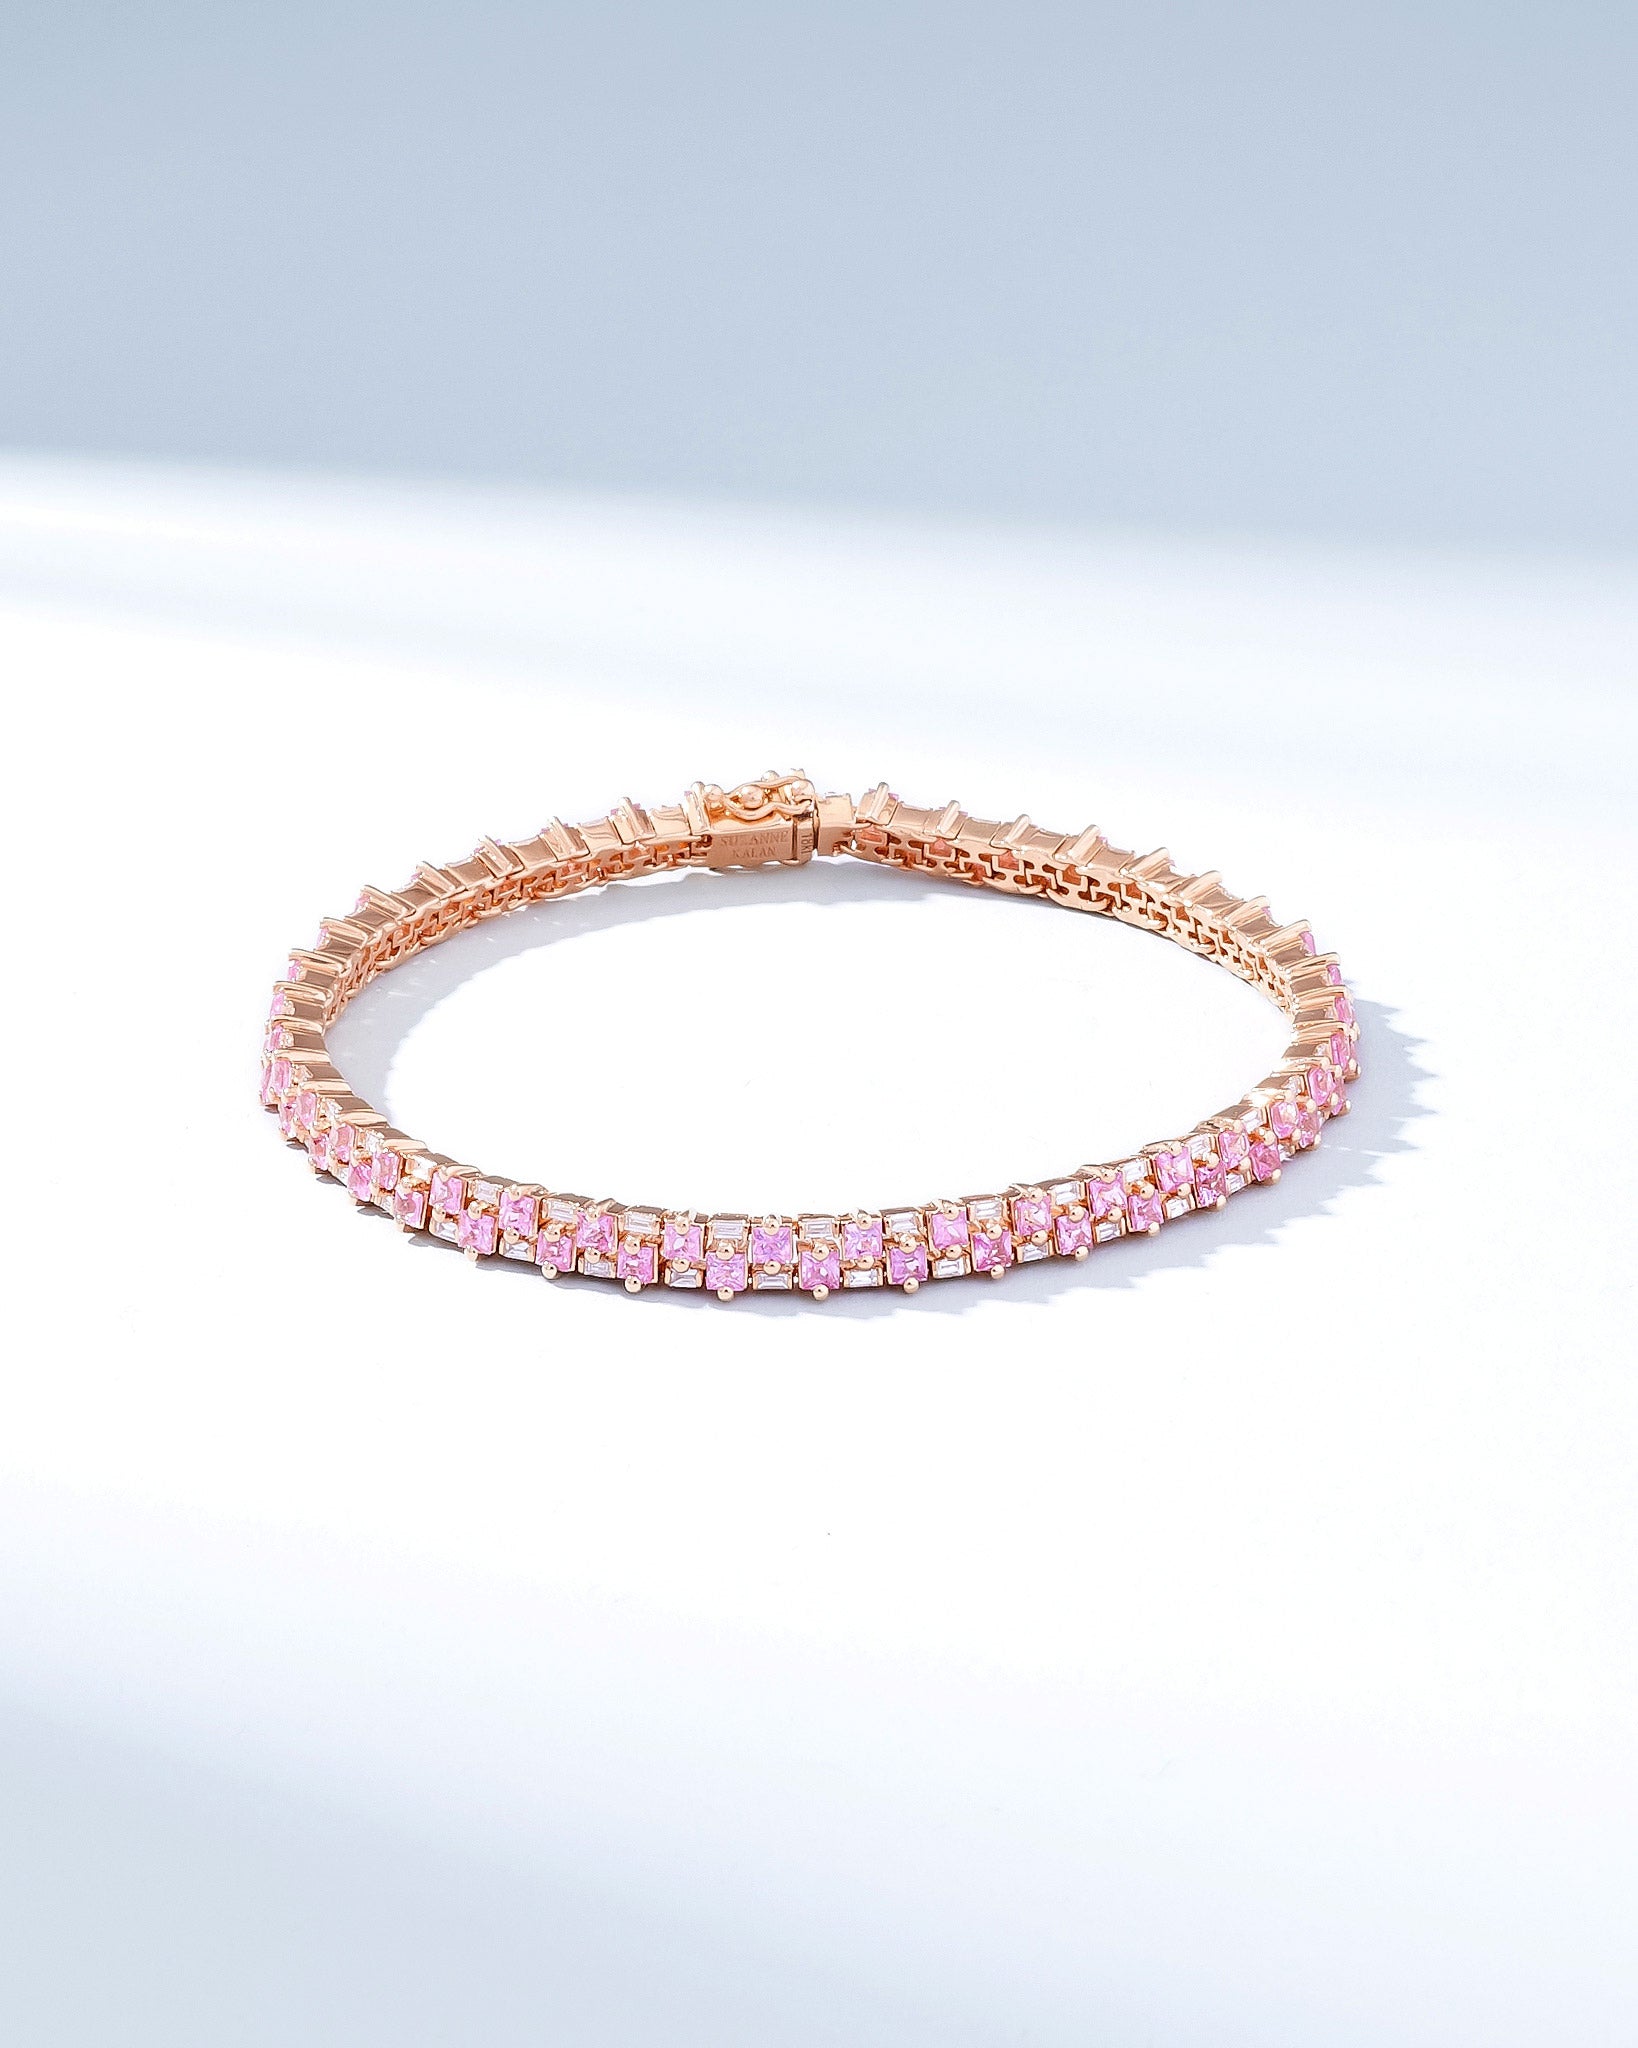 Suzanne Kalan Princess Mini Stack Pink Sapphire Tennis Bracelet in 18K rose gold